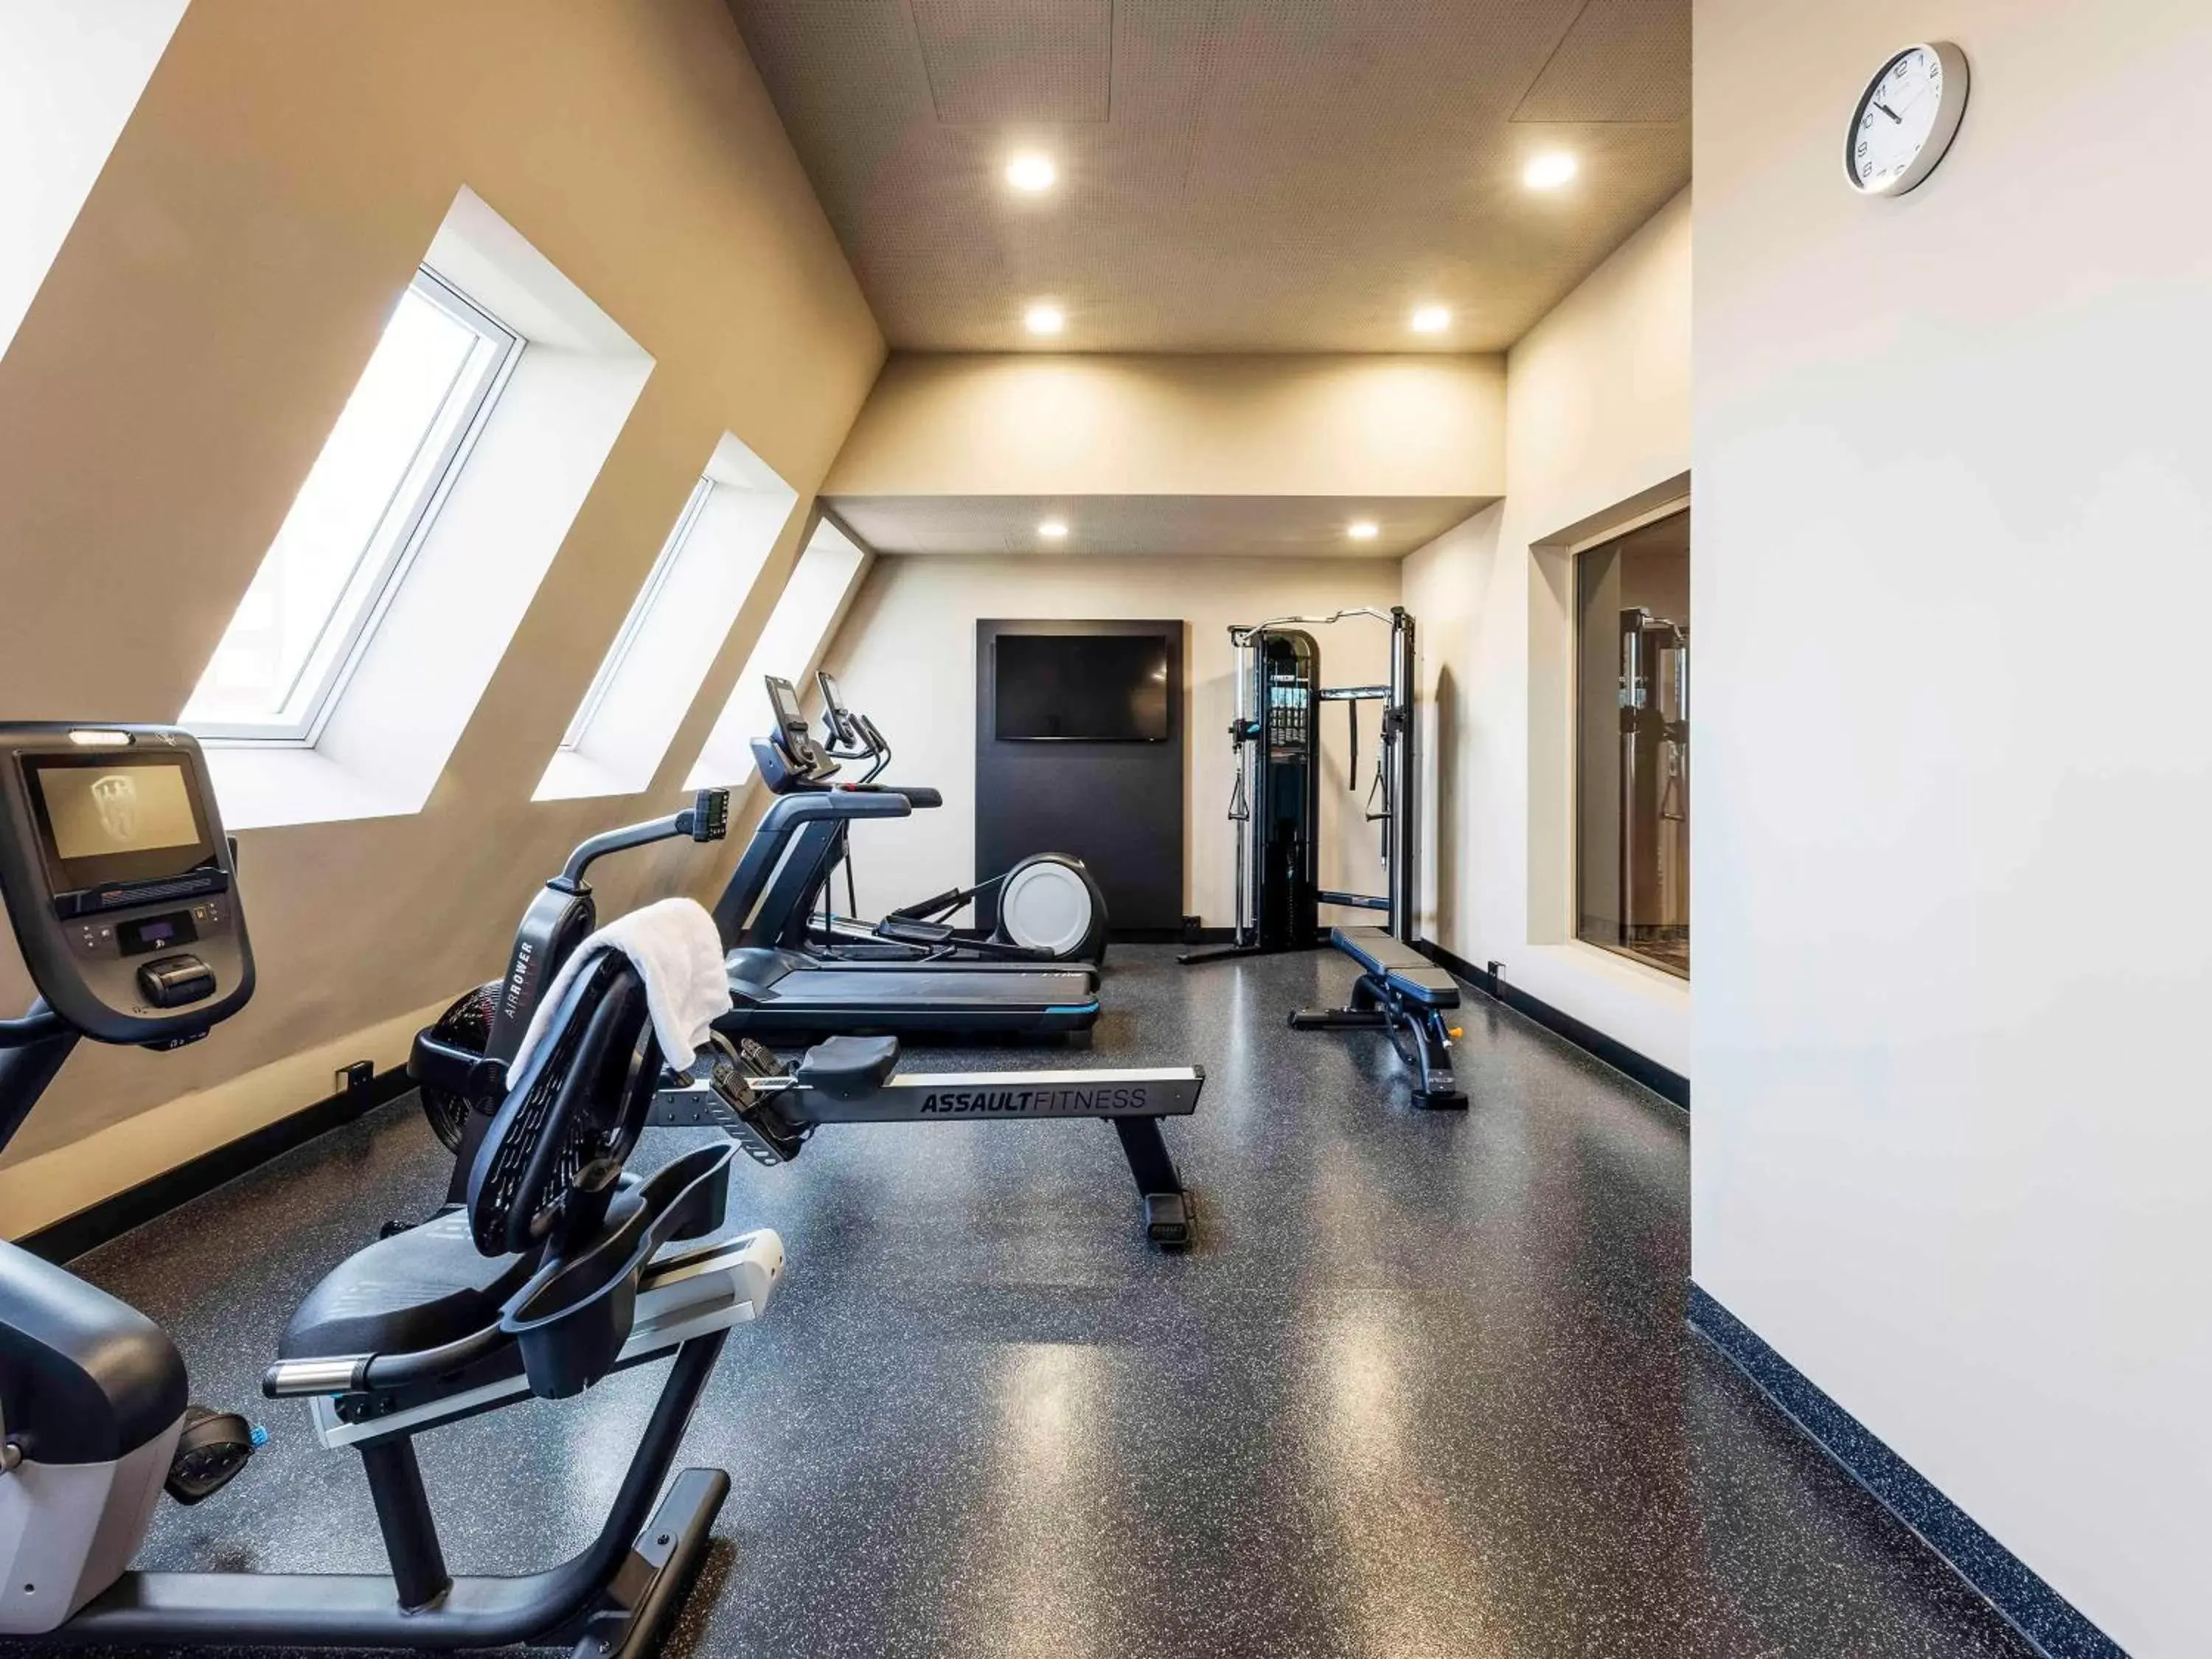 Fitness centre/facilities, Fitness Center/Facilities in Novotel Münster City